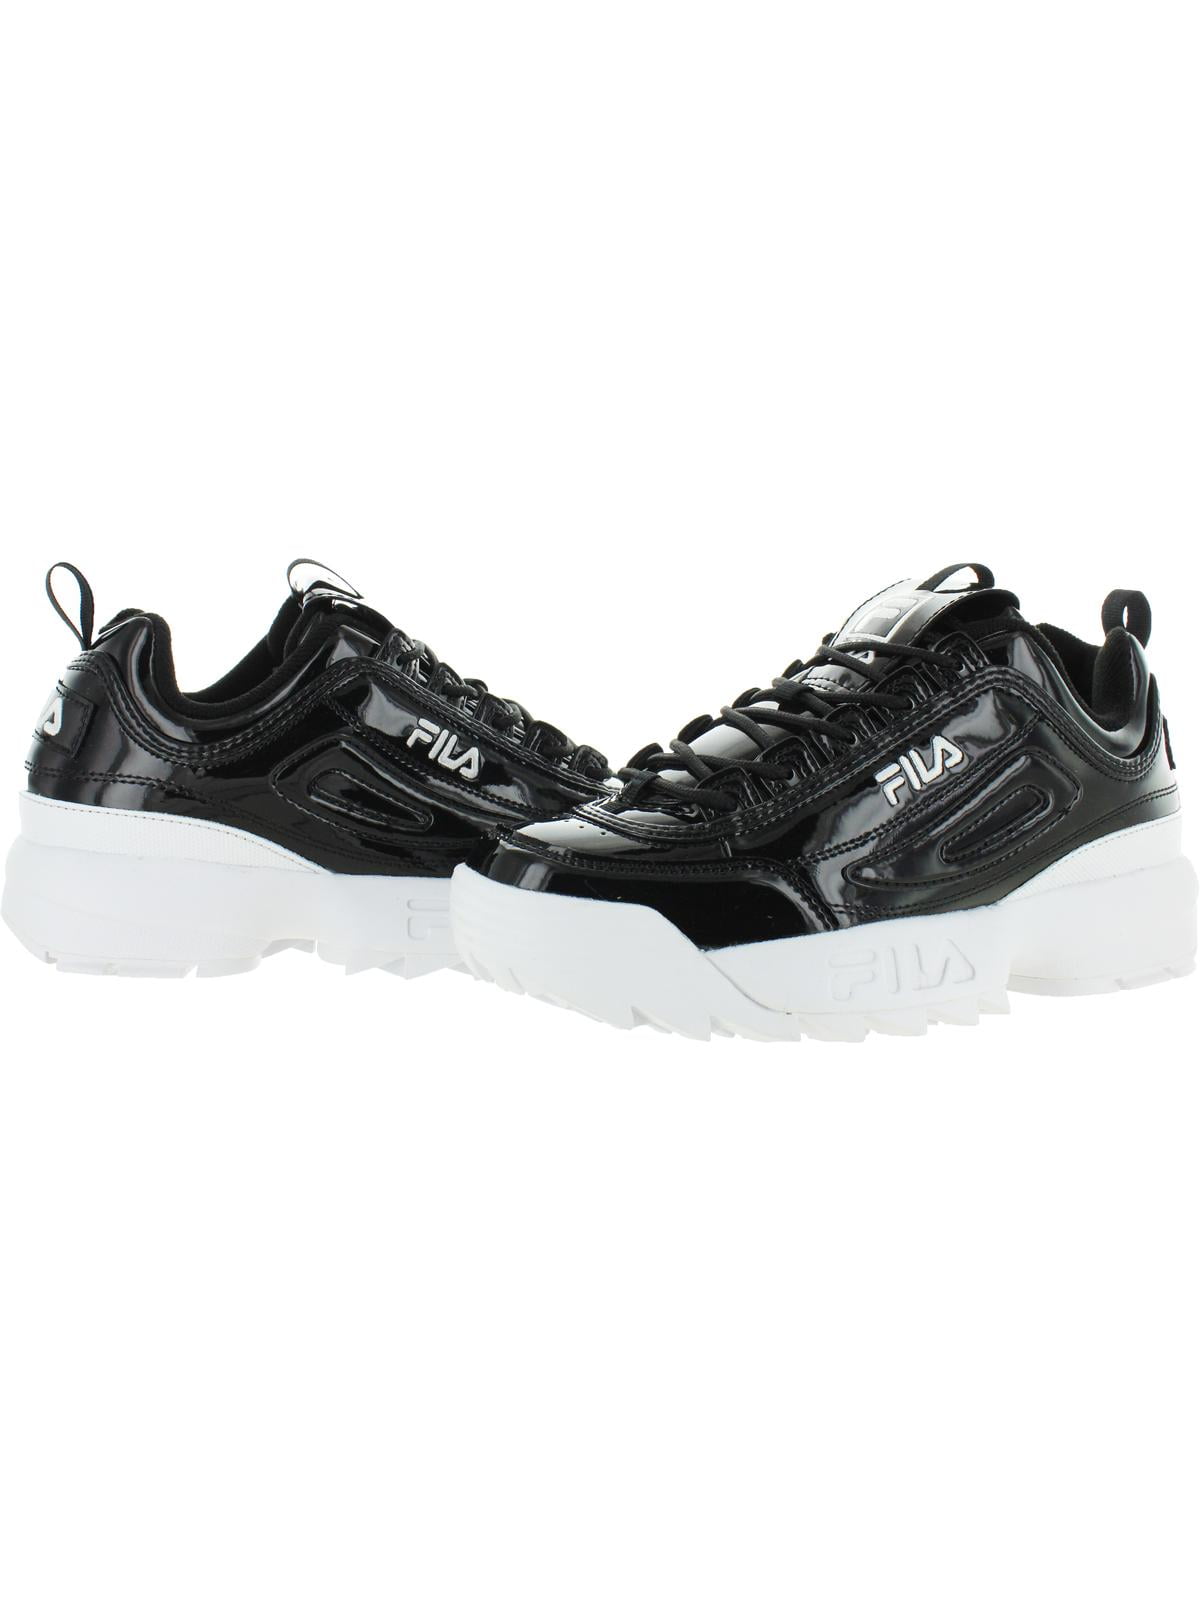 undskyld En god ven lærebog Fila Disruptor II Premium Patent Women's Shoes Black-White 5fm00039-014 -  Walmart.com